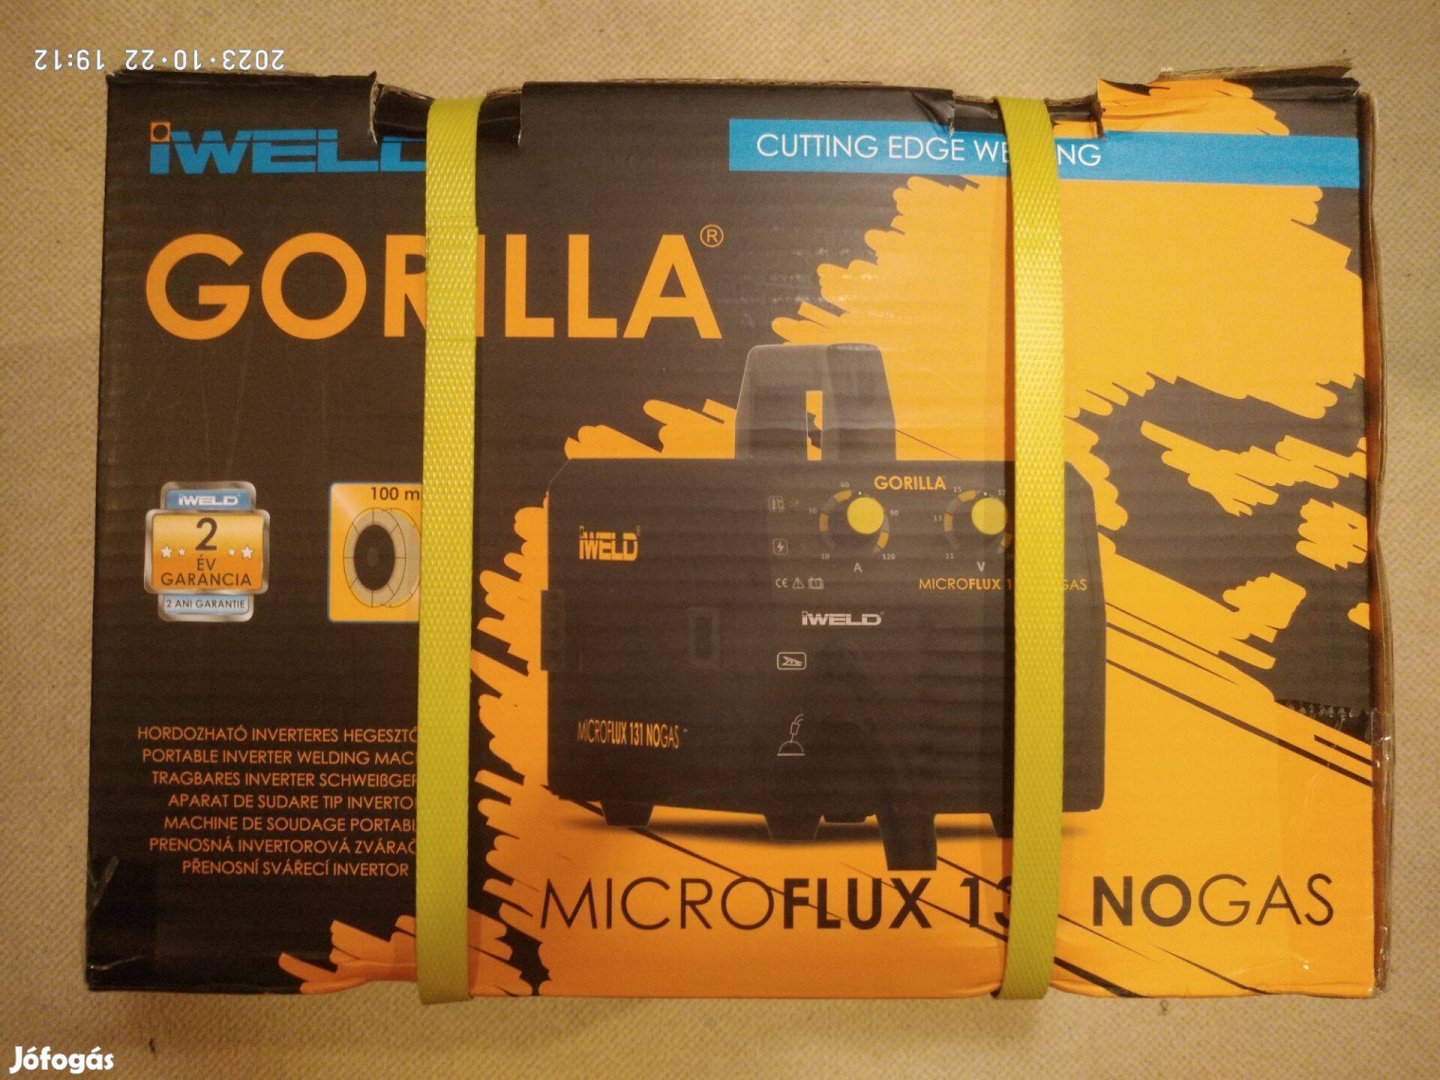 Iweld Gorilla Microflux 131 Nogas inverter porbeles hegesztő 2.0